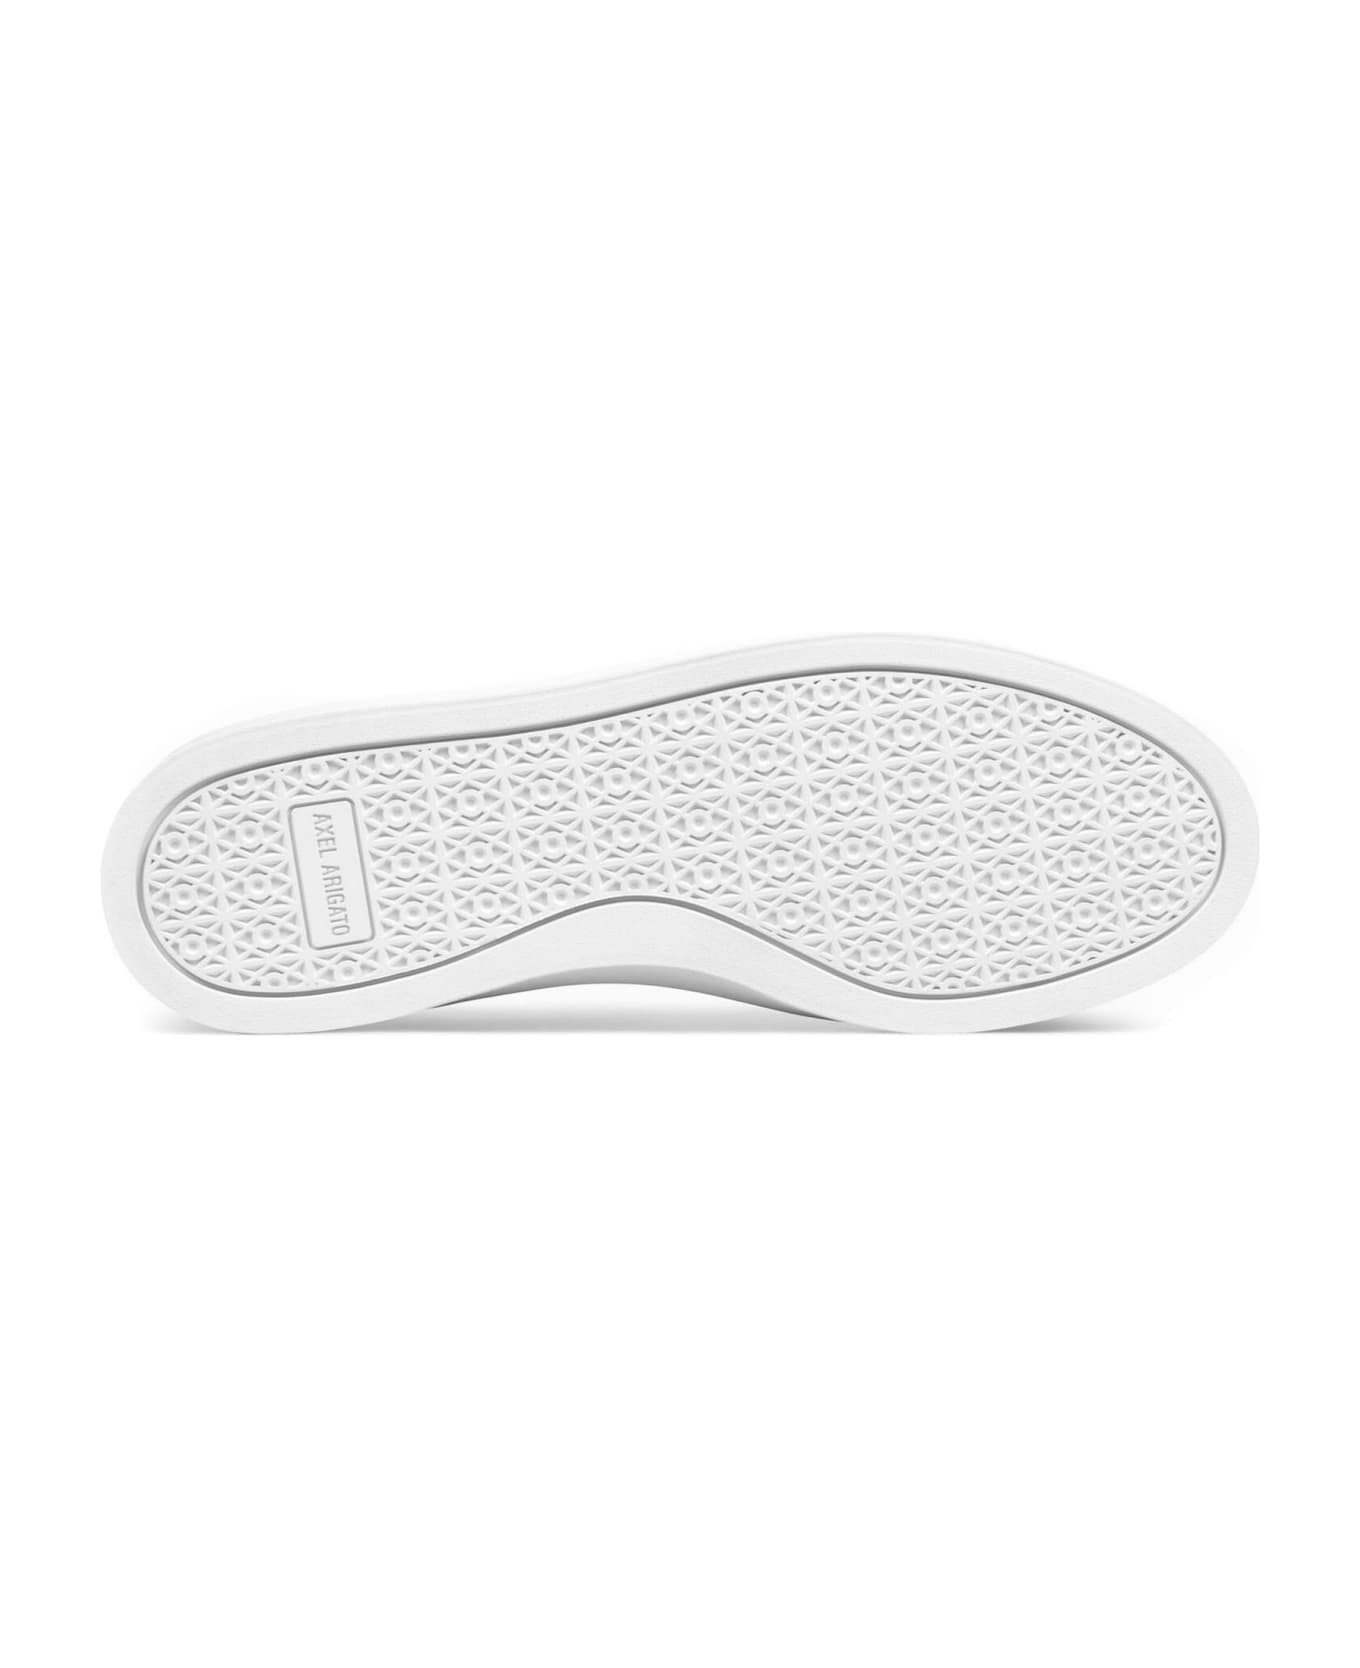 Axel Arigato White Leather Sneakers - White スニーカー